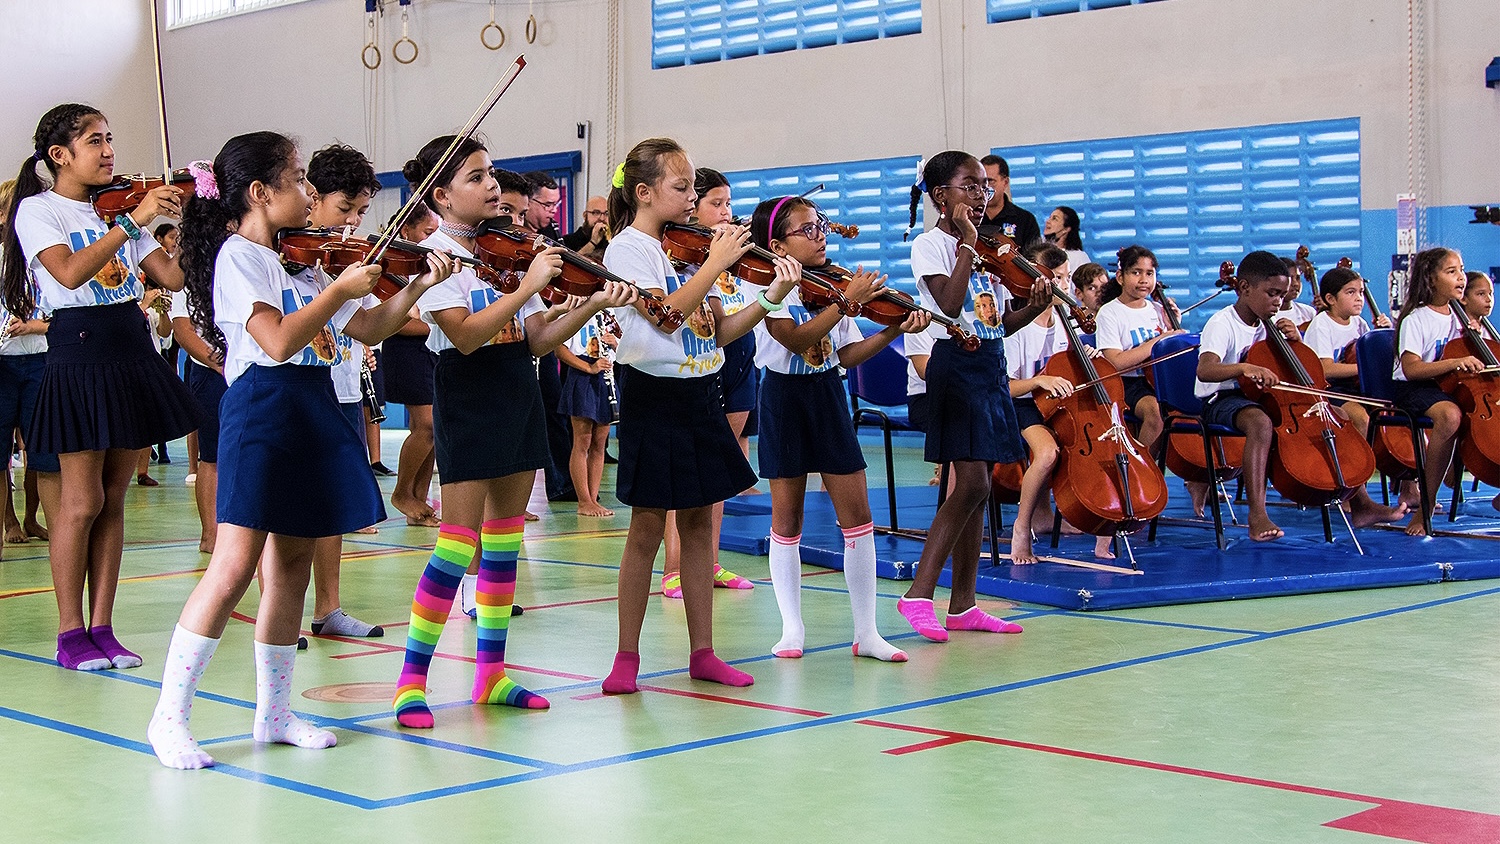 Leerorkest Aruba a haya bunita donacion pa sigui brinda les di musica na mucha